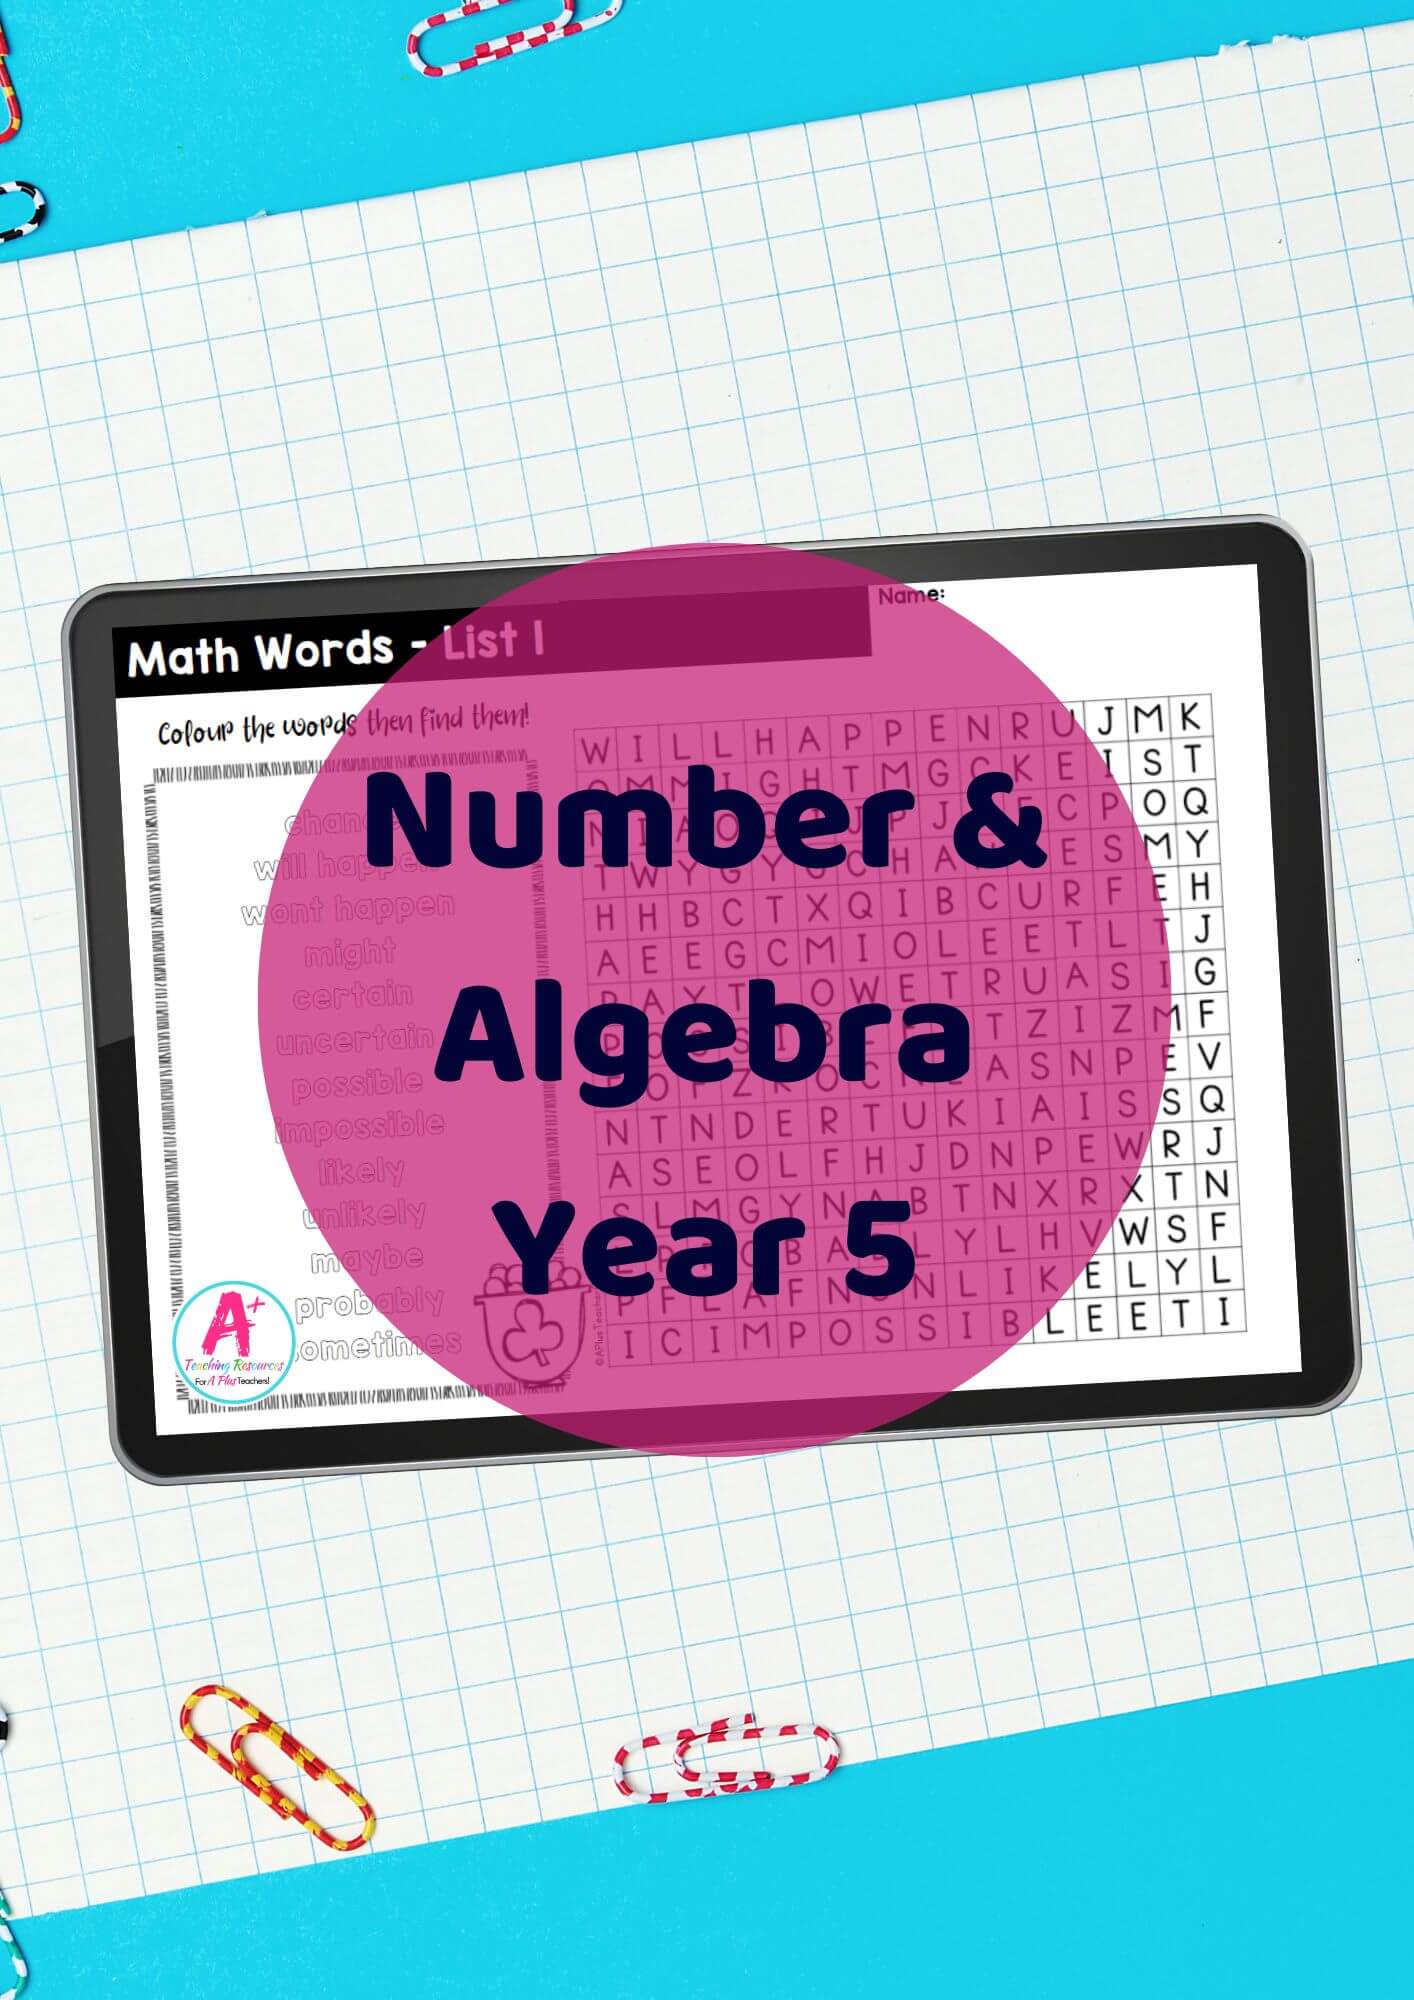 Number & Algebra Vocabulary POWERPOINT - Year 5